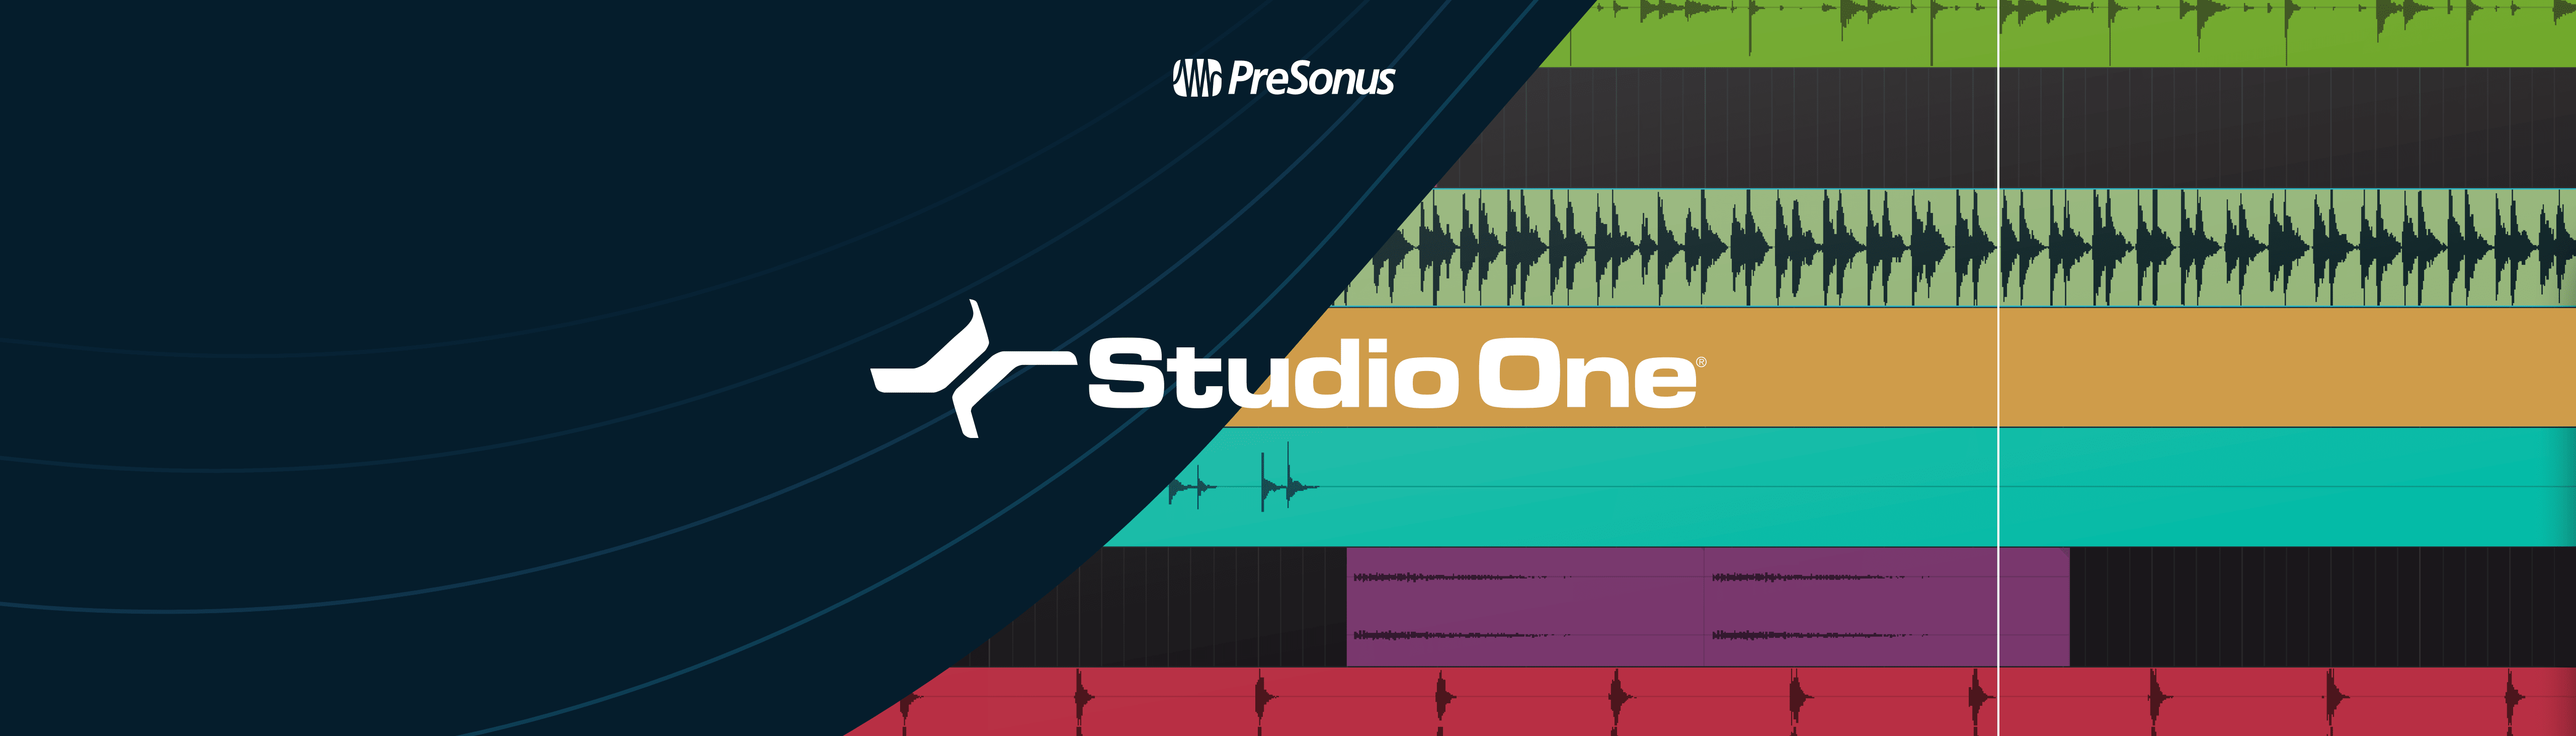 PreSonus Studio One Professional Rent-to-Own